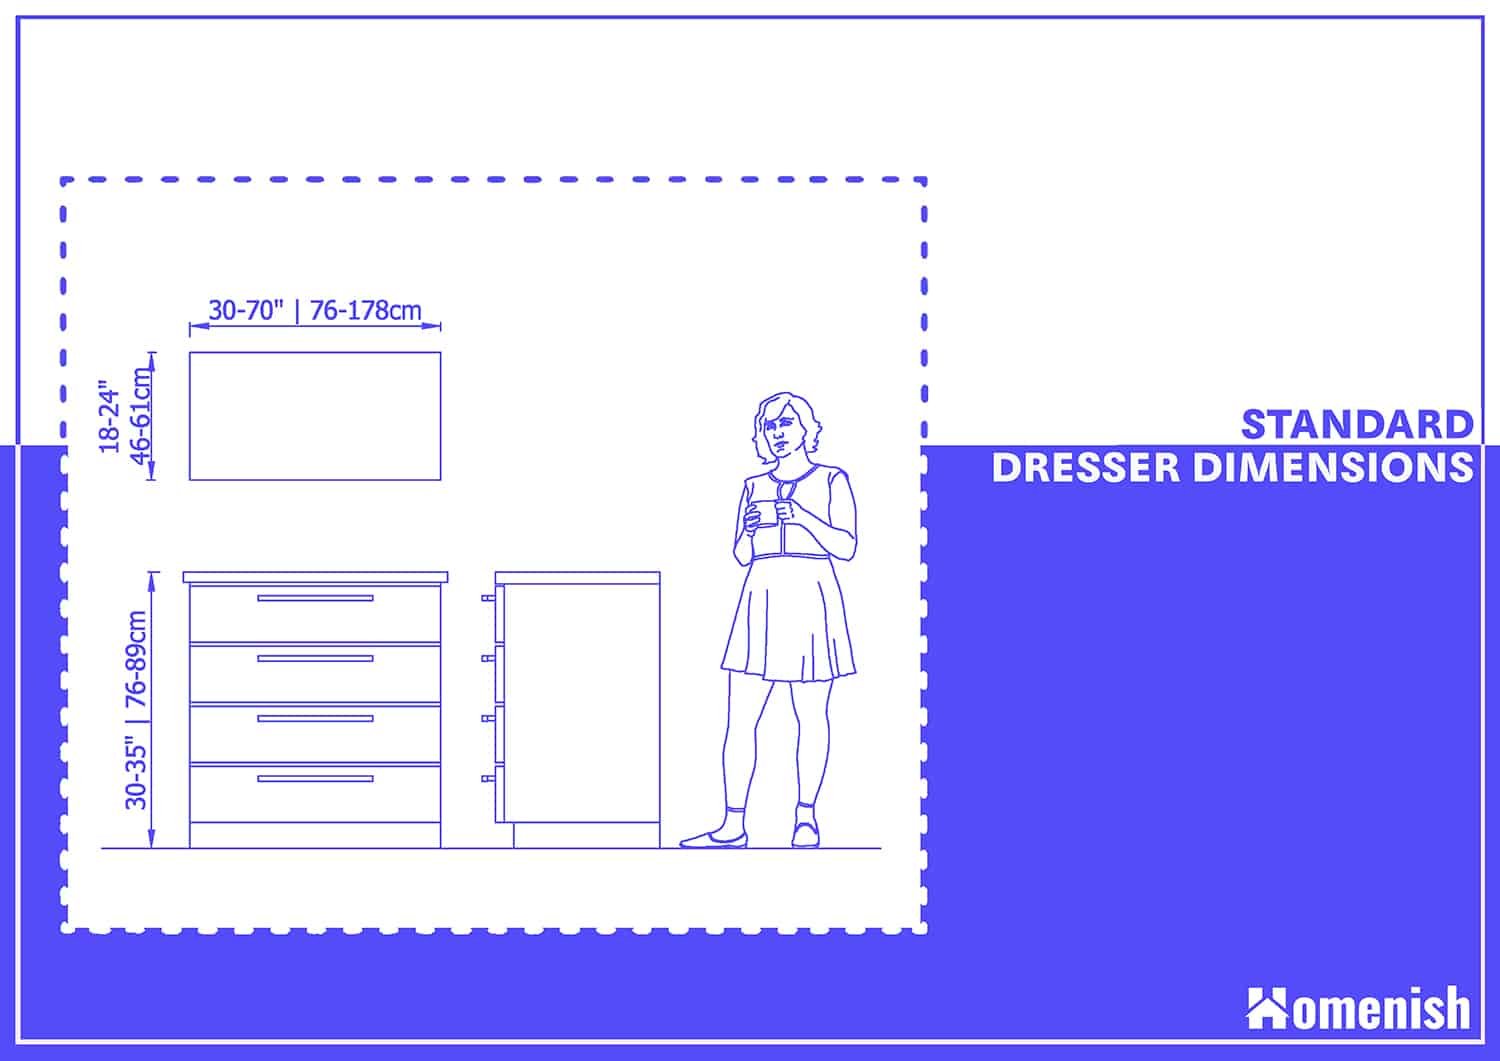 Standard Dresser Dimensions